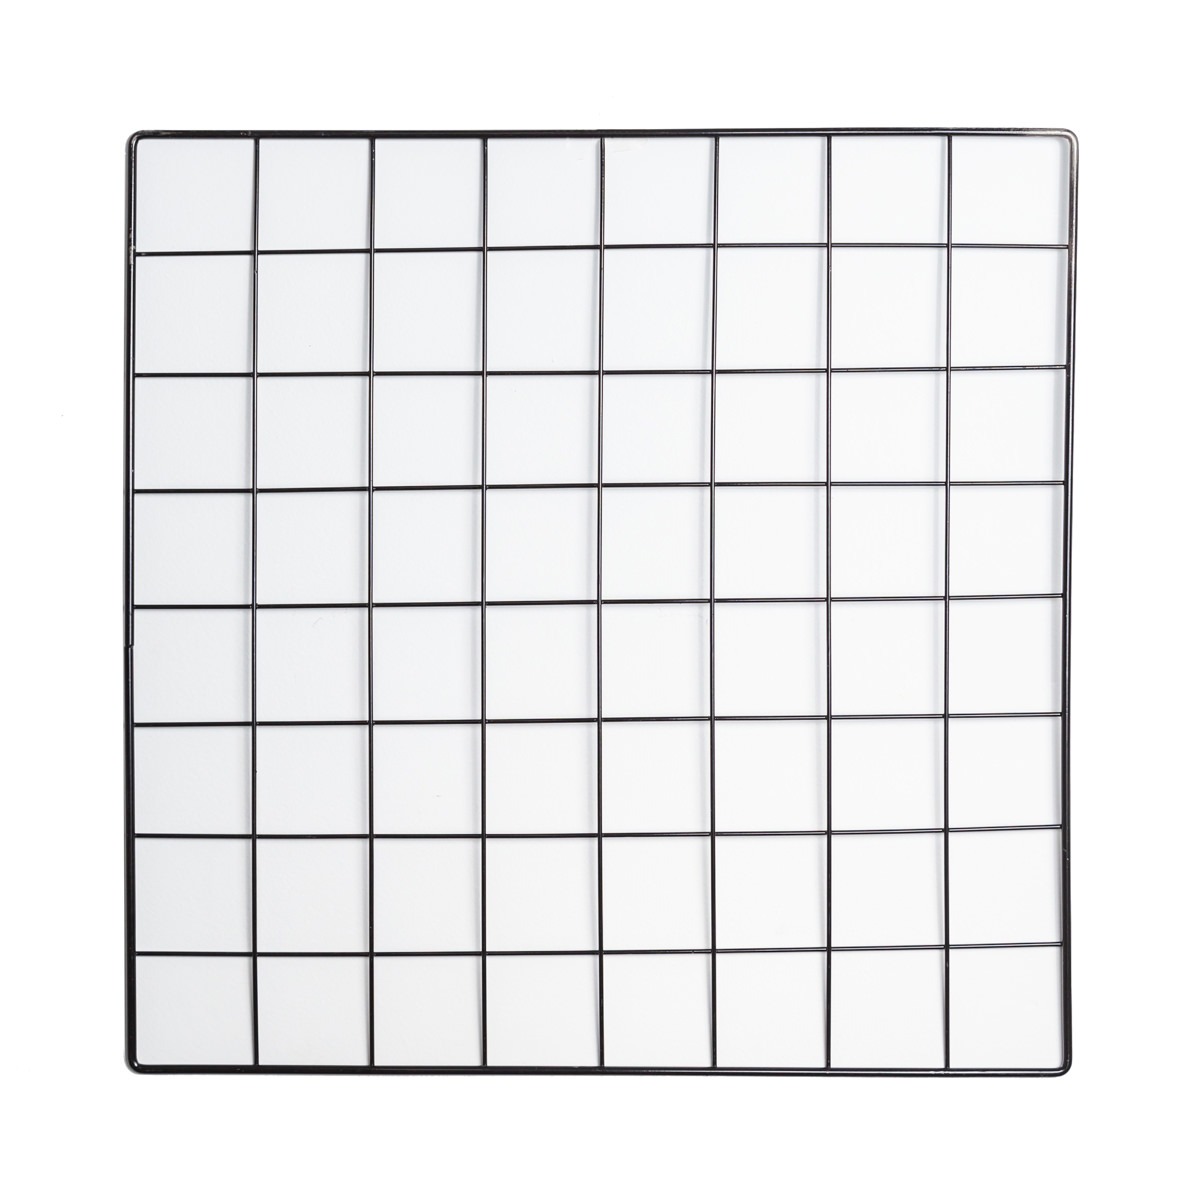 Aramado memory board clássico pequeno. cores: rose/ preto e branco